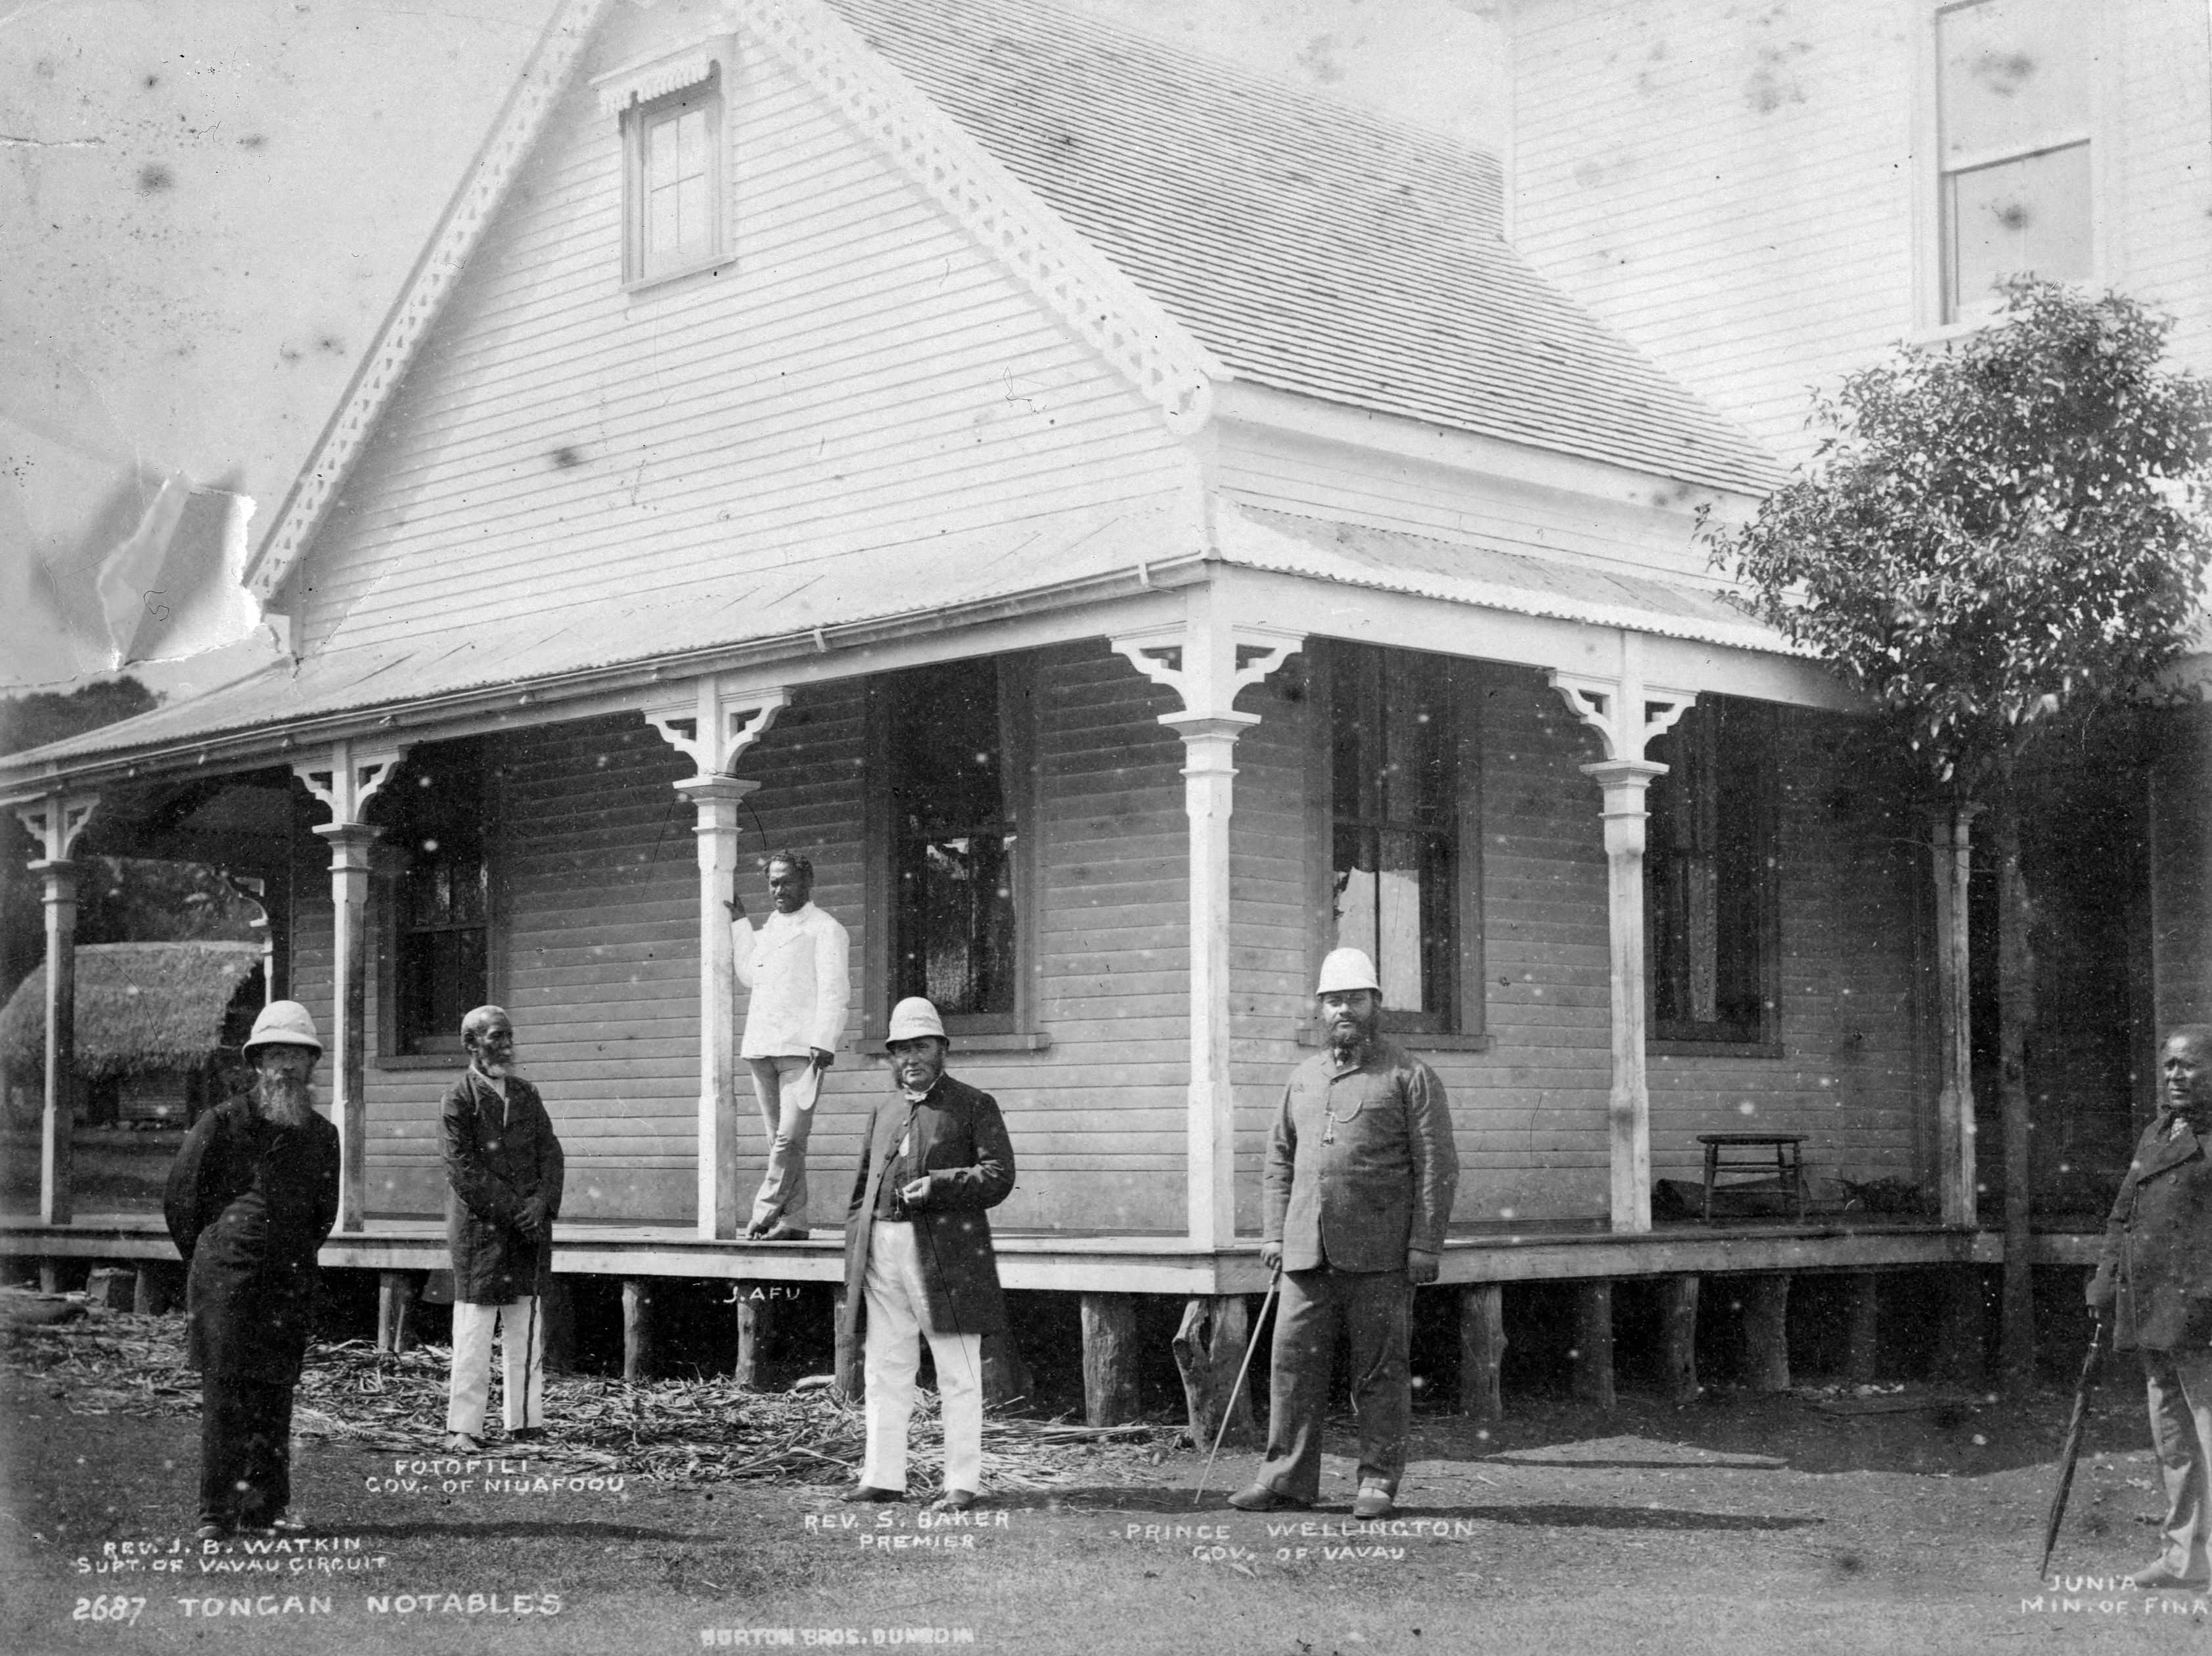 Rev James B Watkin, Fotofili, J Afu, Rev Shirley Waldemar Baker, Prince Wellington and Junia standing outside a house in Neiafu, Tonga